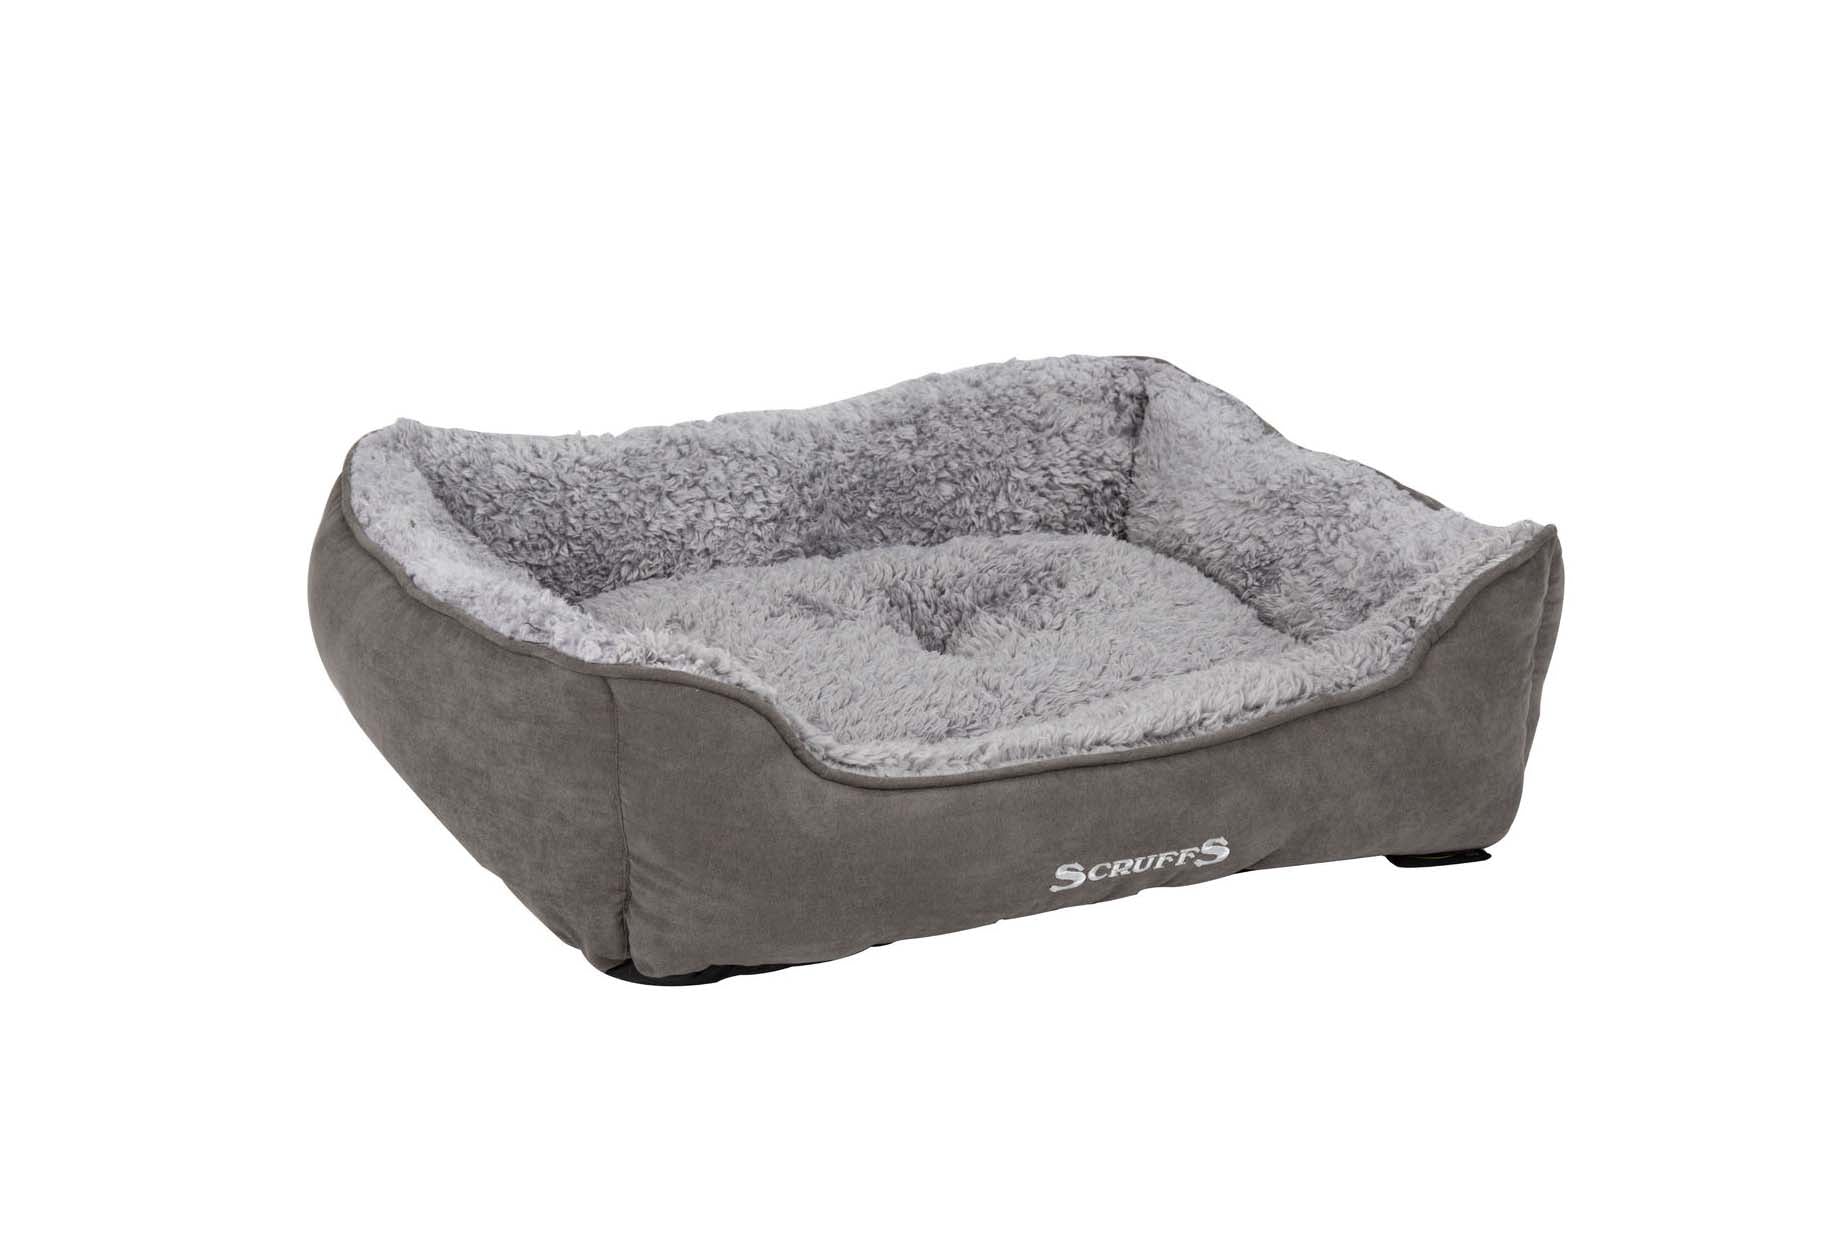 Scruffs Cosy Box Grey Dog Bed